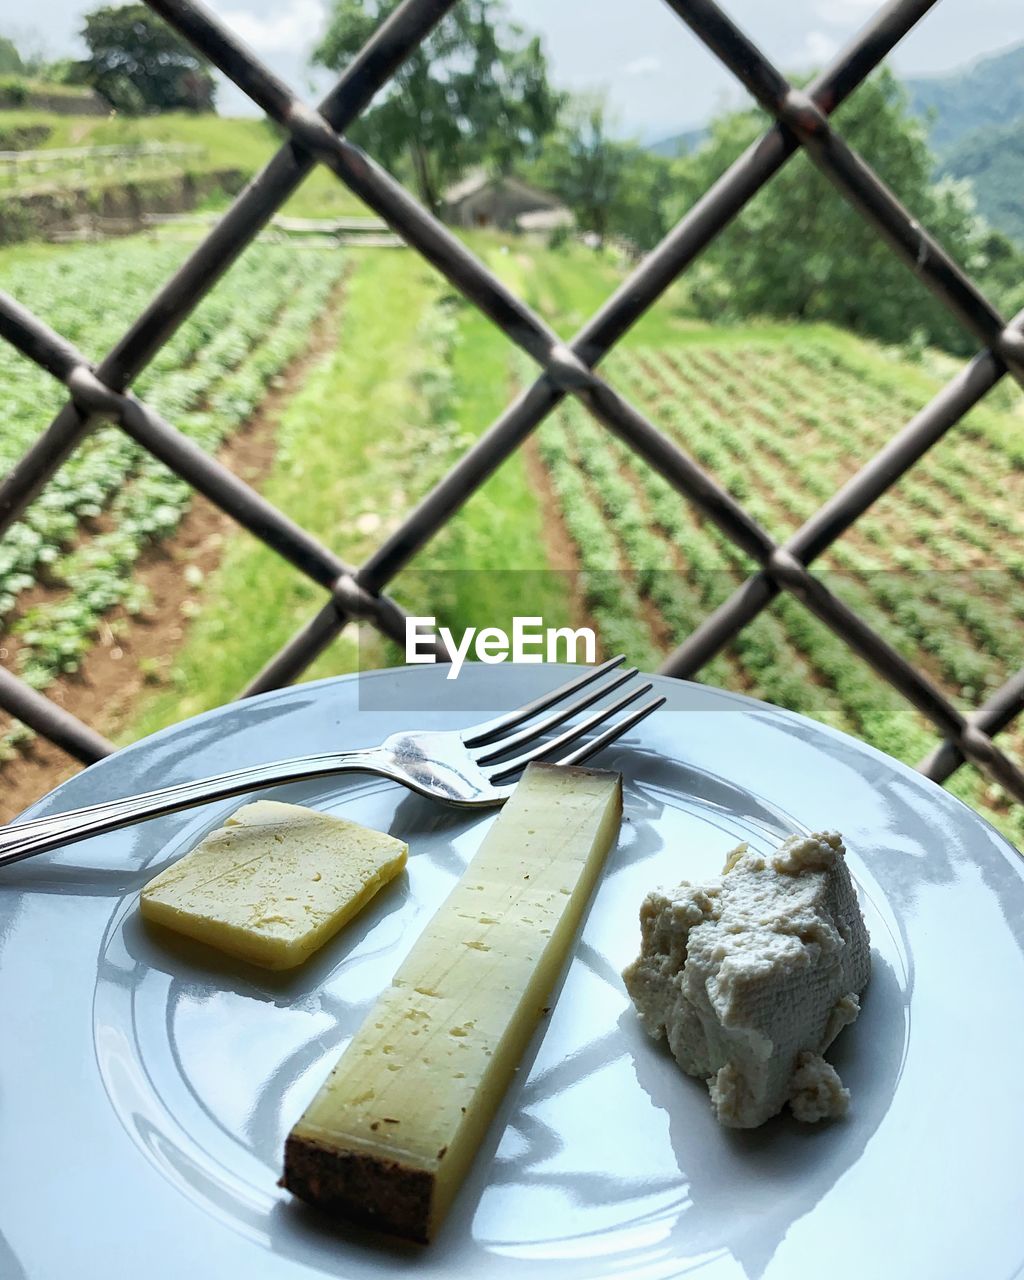 High angle view of food in plate on table, trappa di sordevolo, biella province, italy